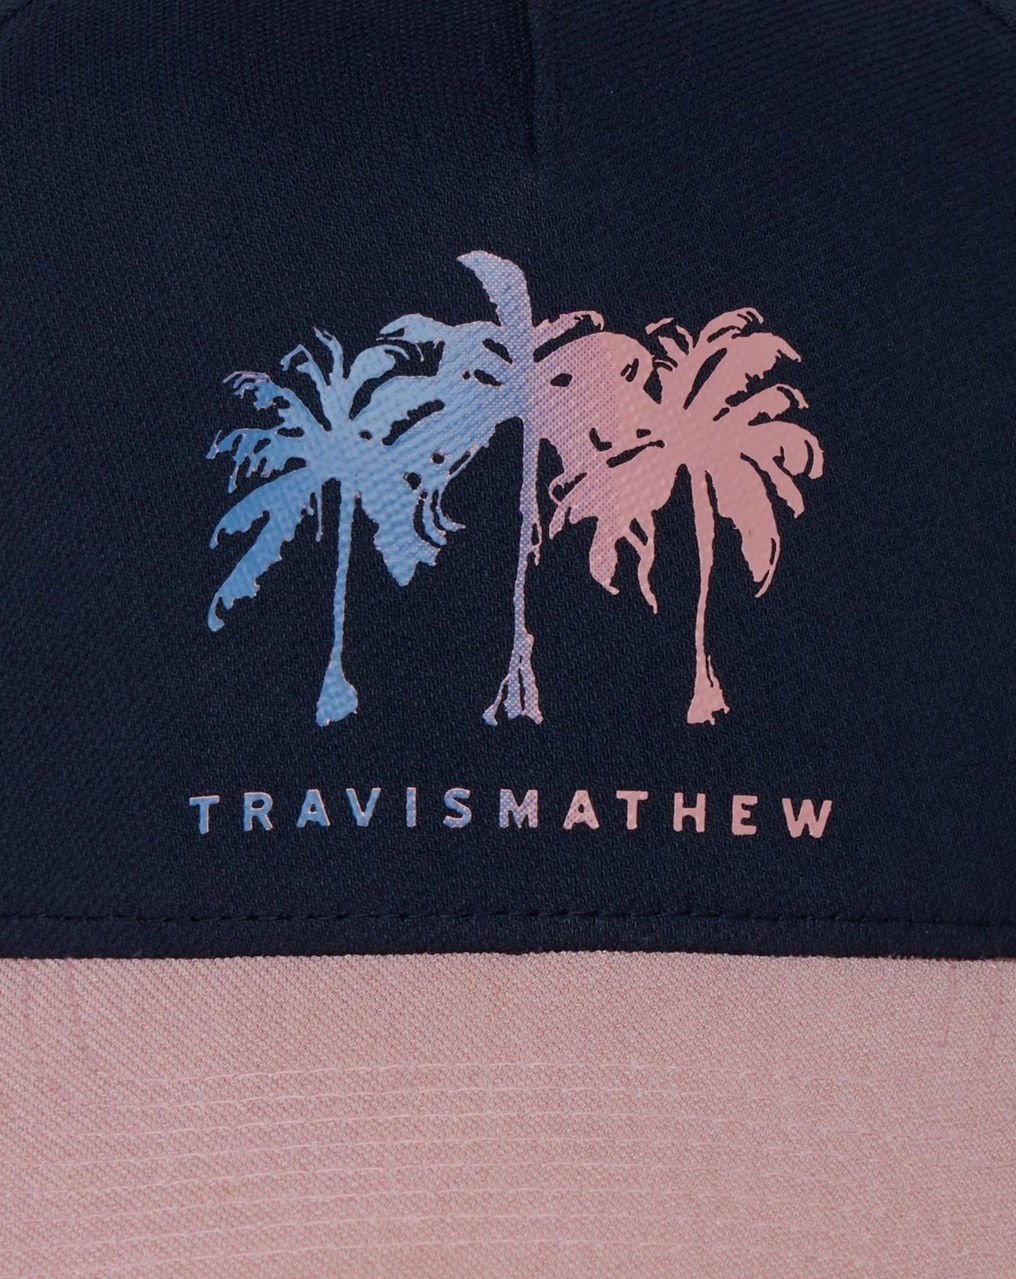 TravisMathew Men's & Women's Clothing & Golf Apparel | Official Store